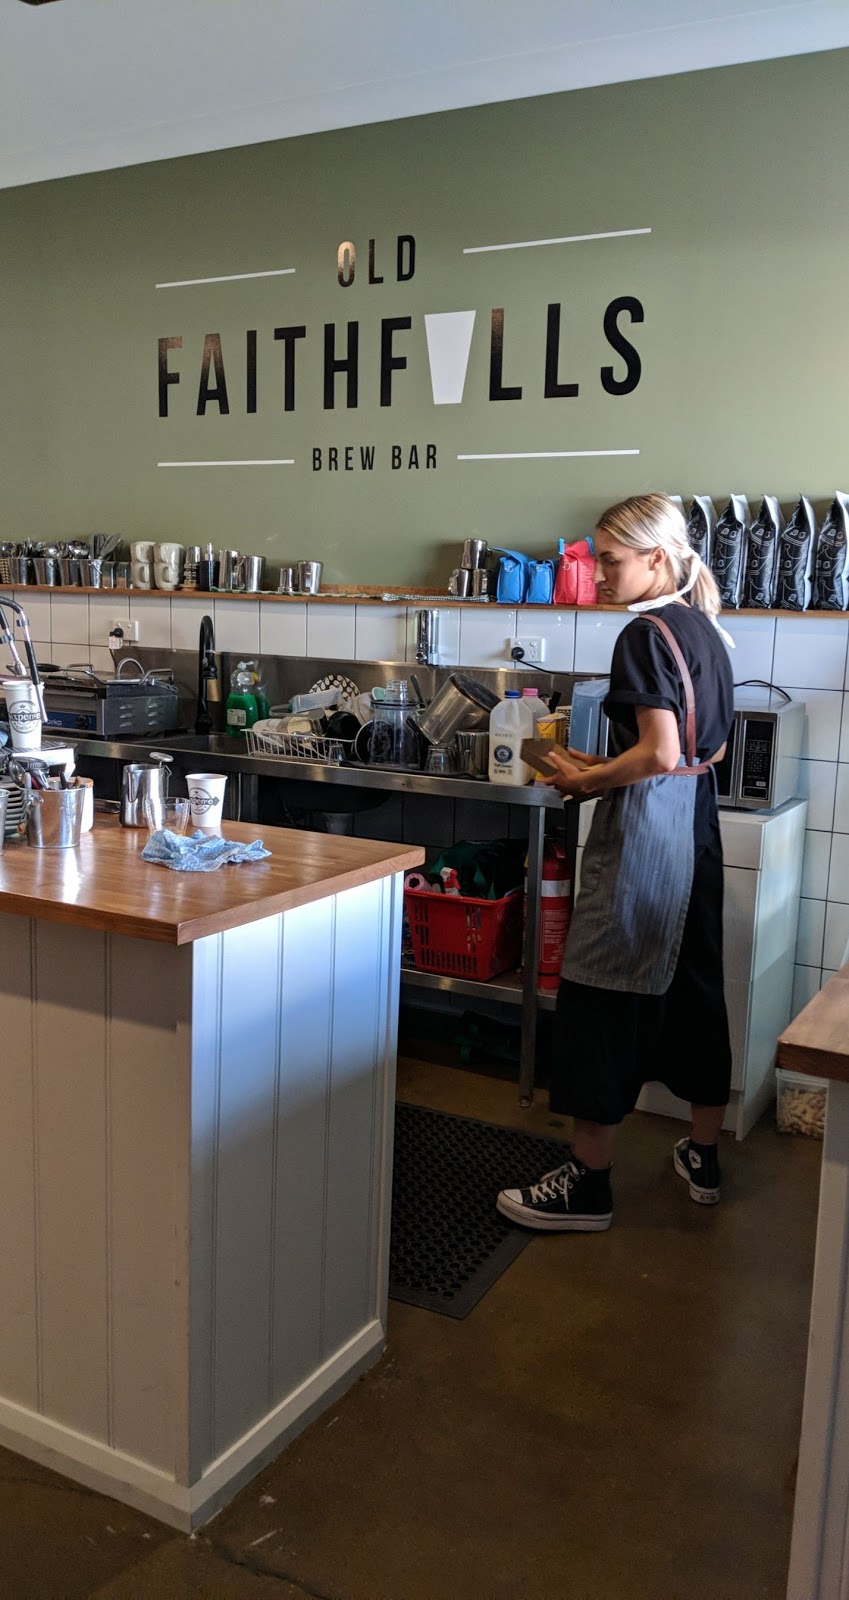 Old Faithfulls Brew Bar | cafe | 40 Faithfull St, Wangaratta VIC 3677, Australia